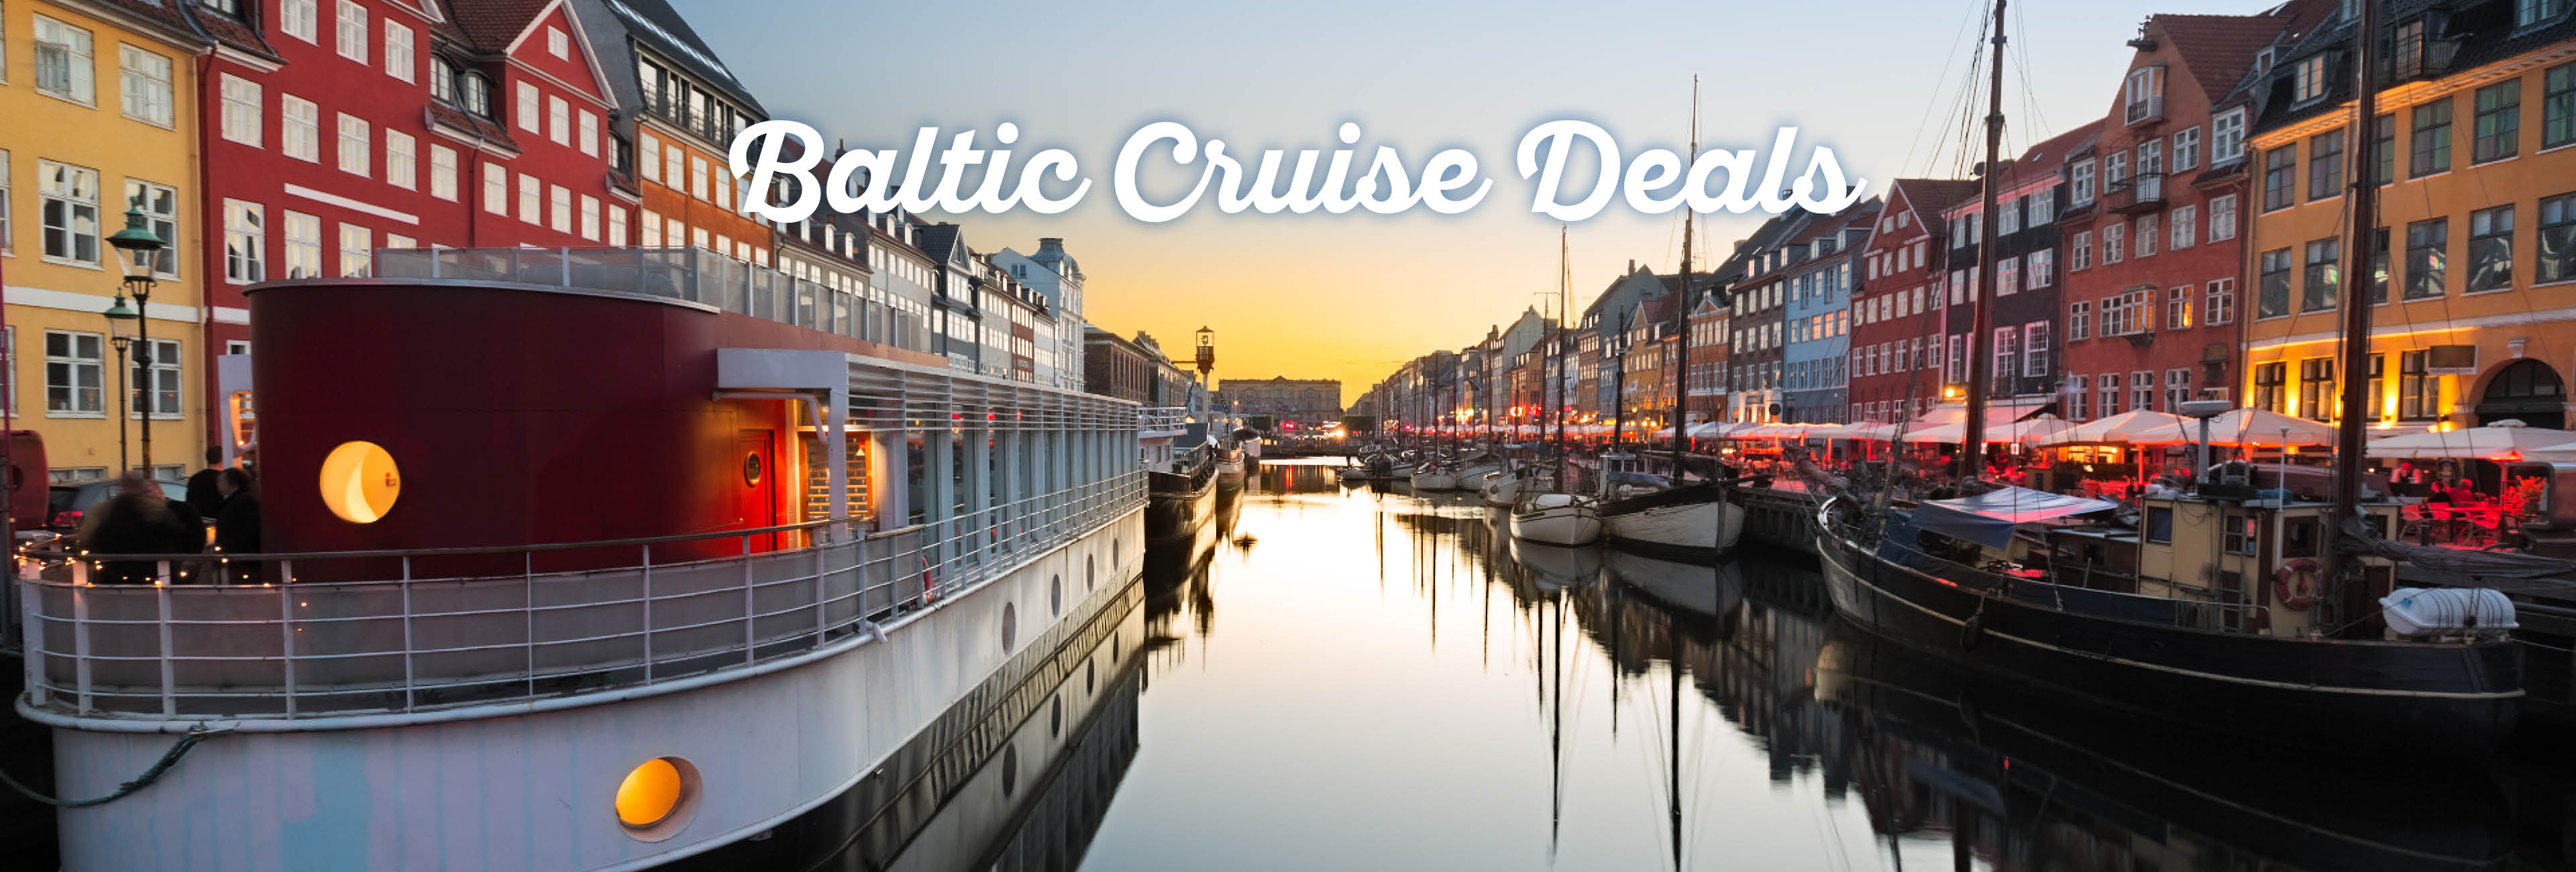 baltic-cruise-deals1.jpg